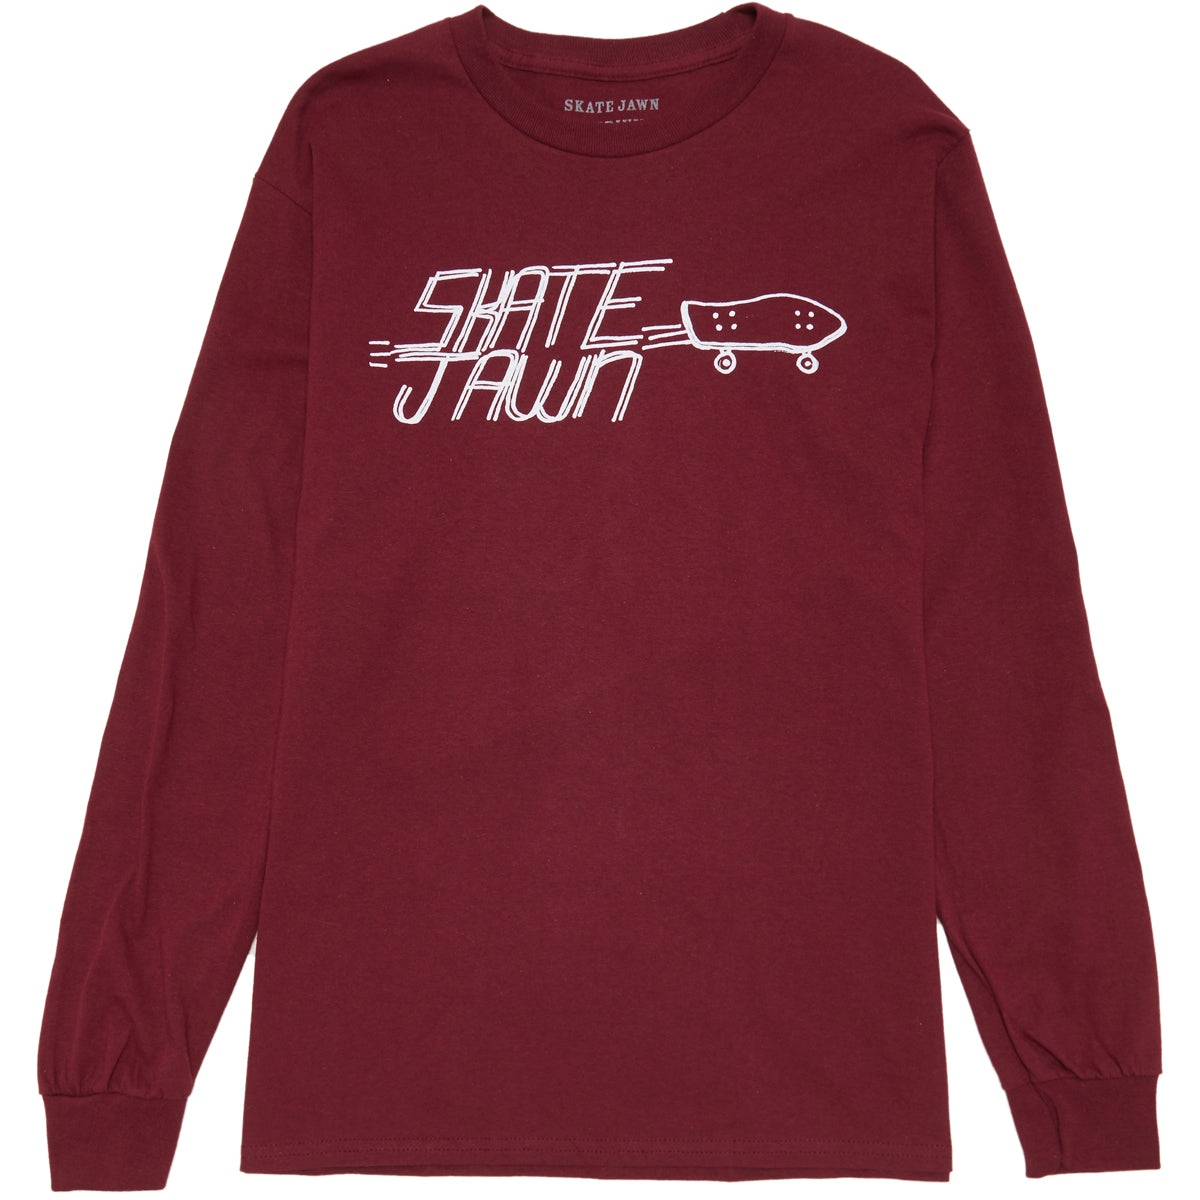 Skate Jawn Cruiser Long Sleeve T-Shirt - Burgundy image 1